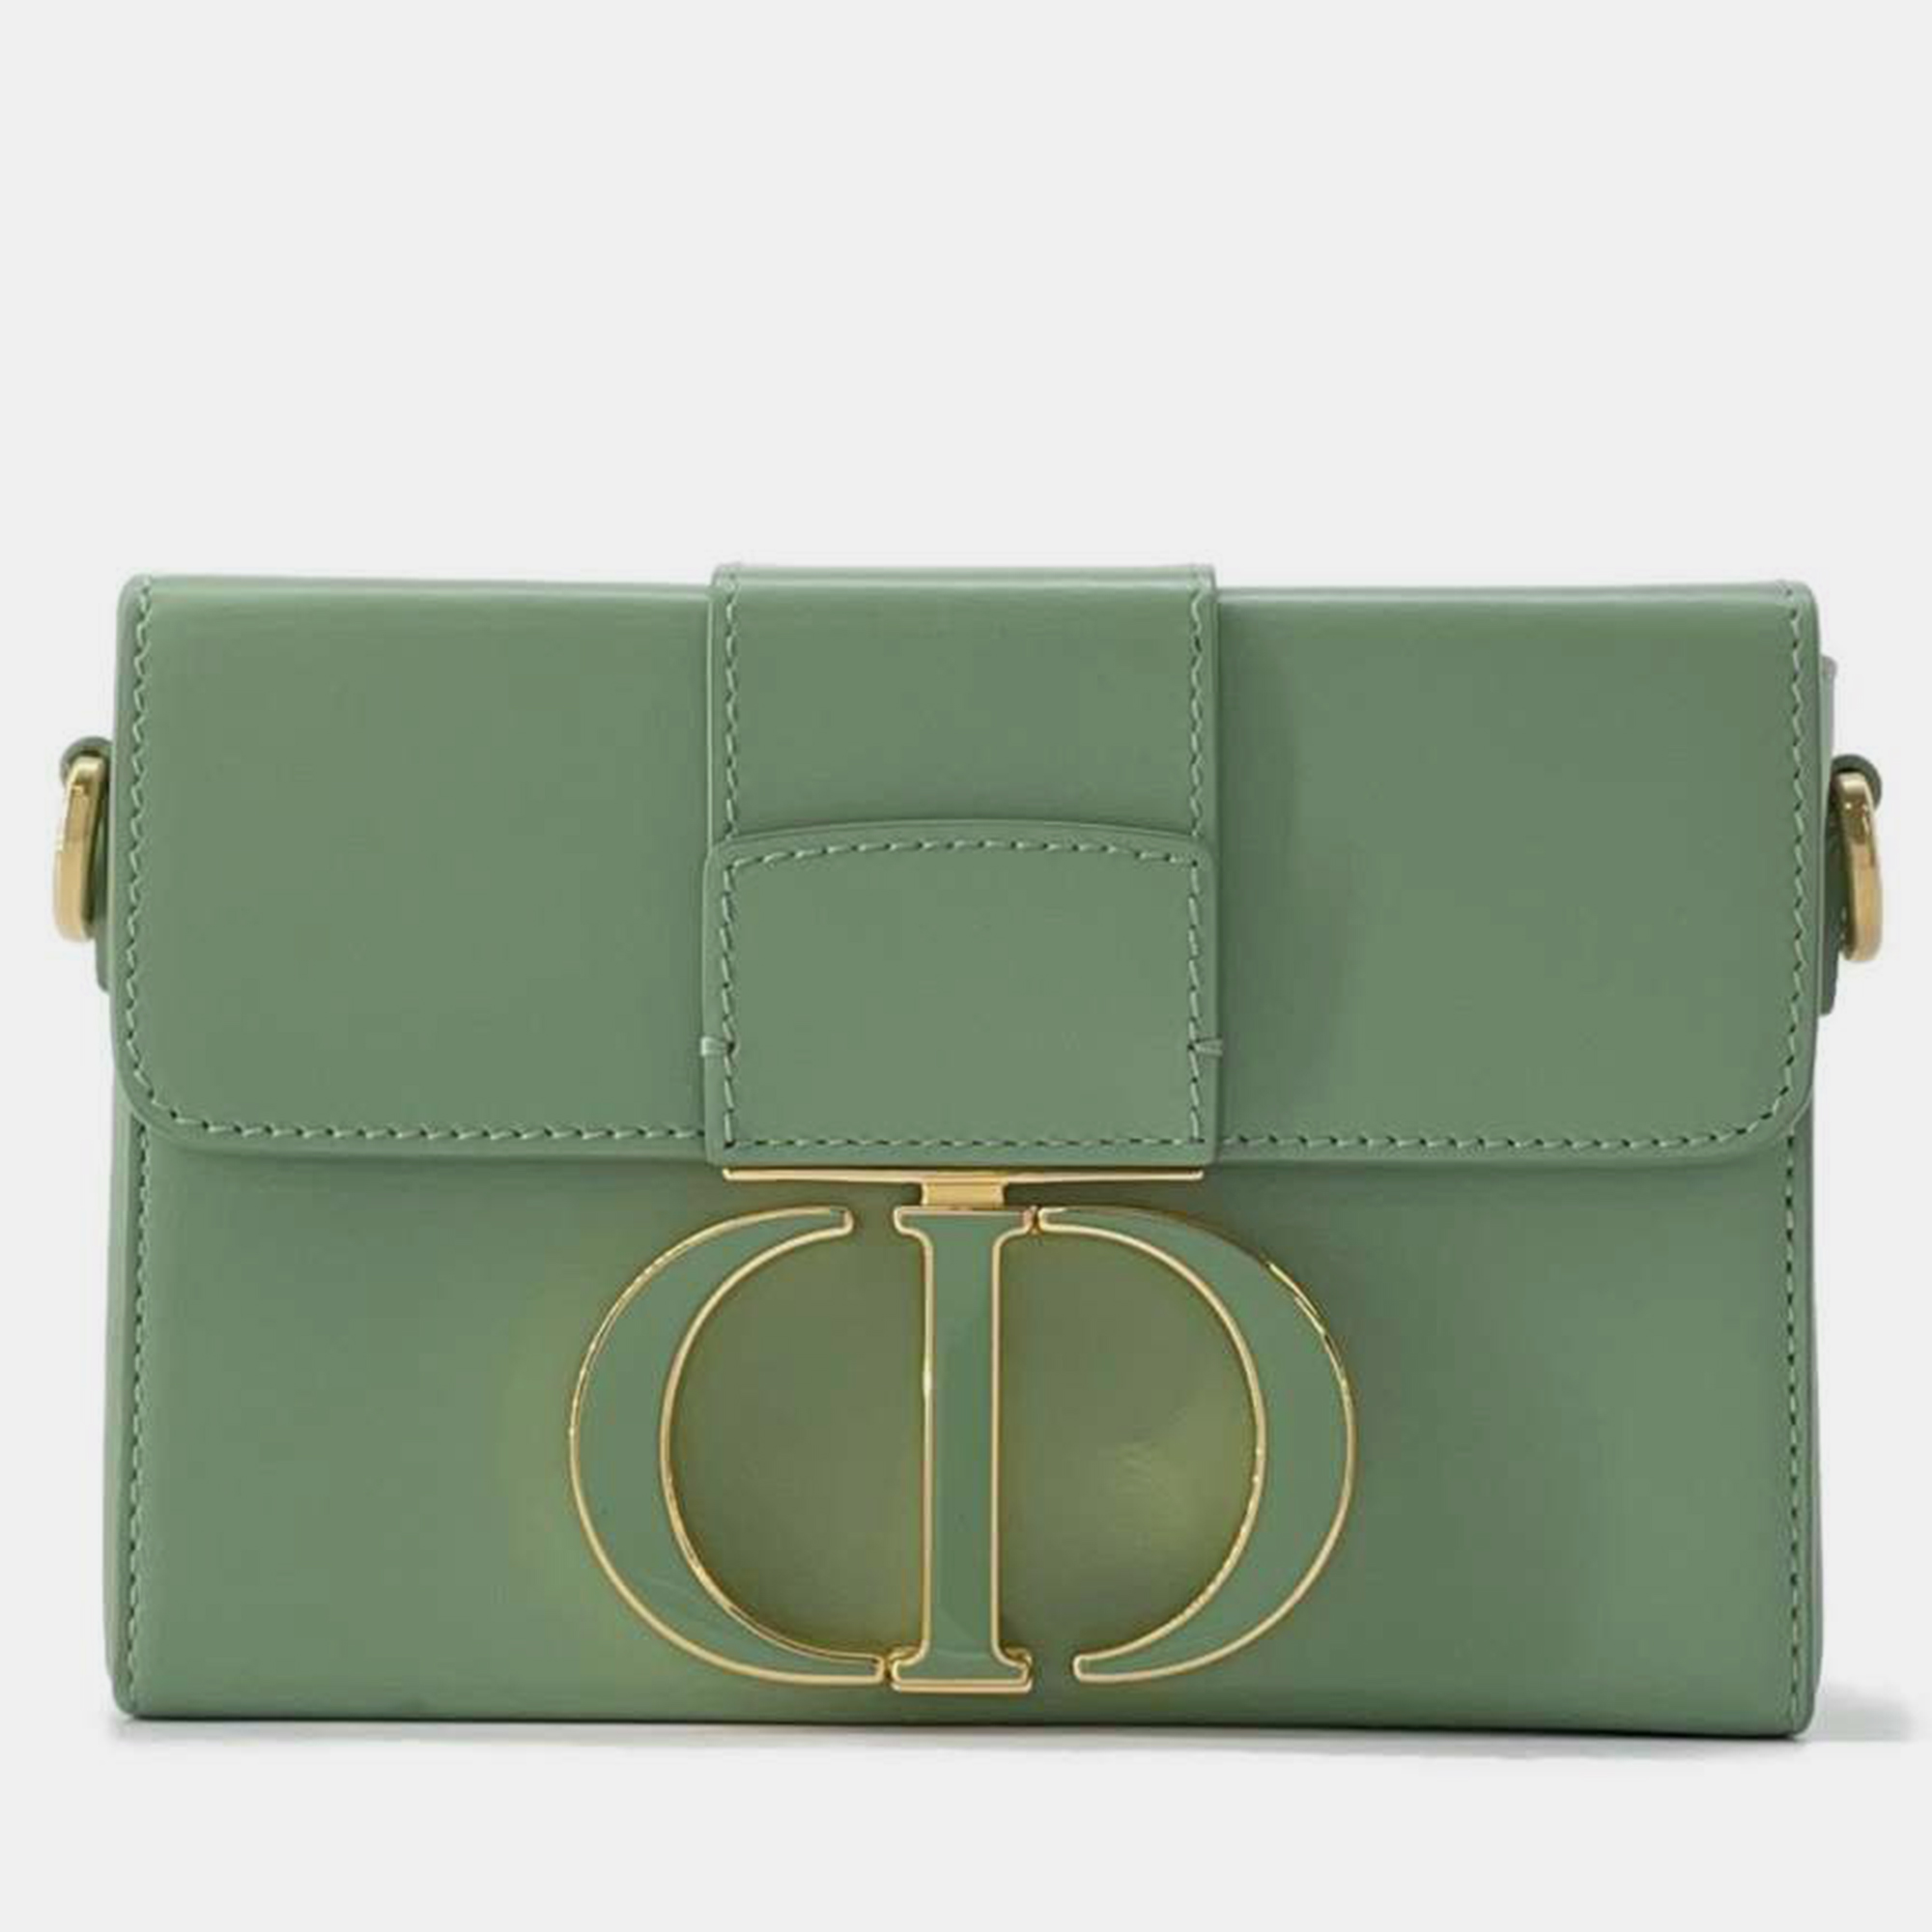 Dior green leather 30 montaigne shoulder bag